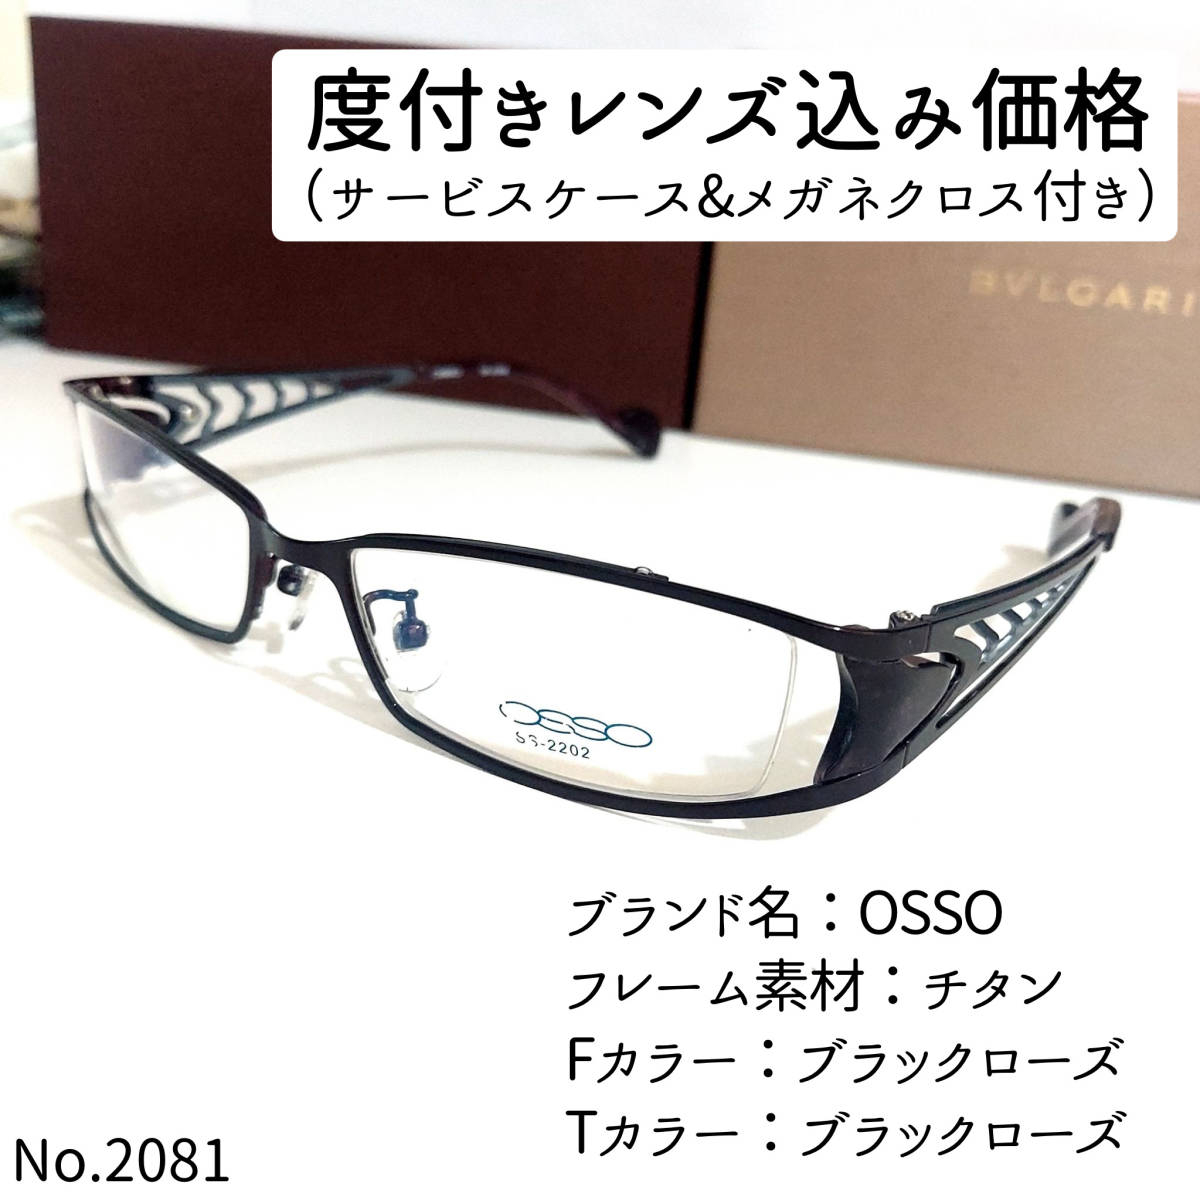 No.2115 メガネ OSSO - 通販 - autoescuelacrucena.com